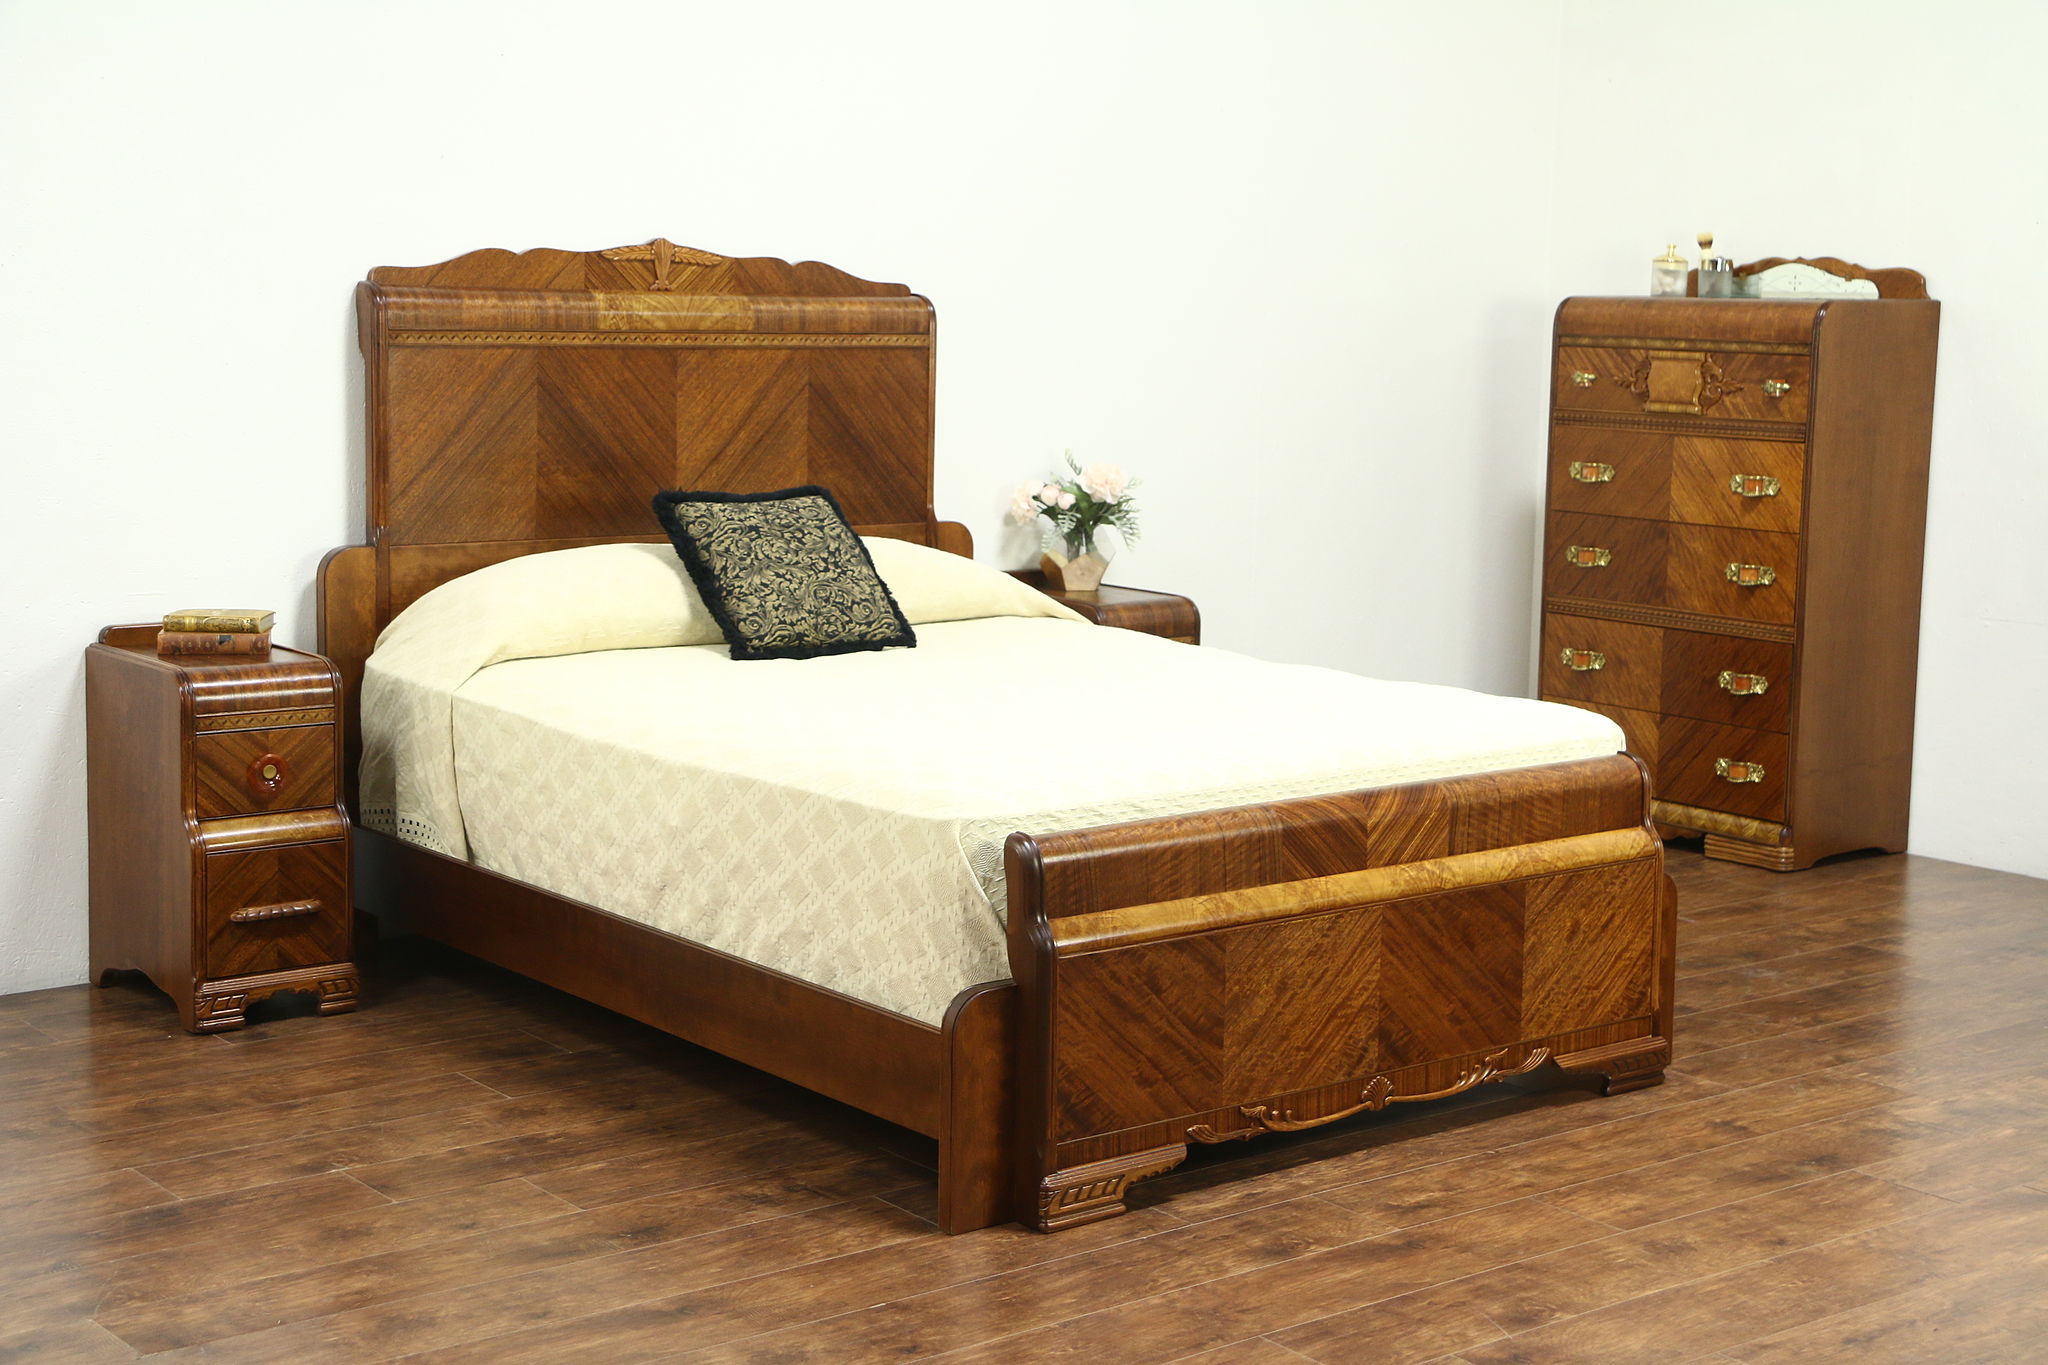 Sold Waterfall Art Deco Vintage Bedroom Set Queen Size Bed Chest 2 Nightstands Harp Gallery Antiques Furniture